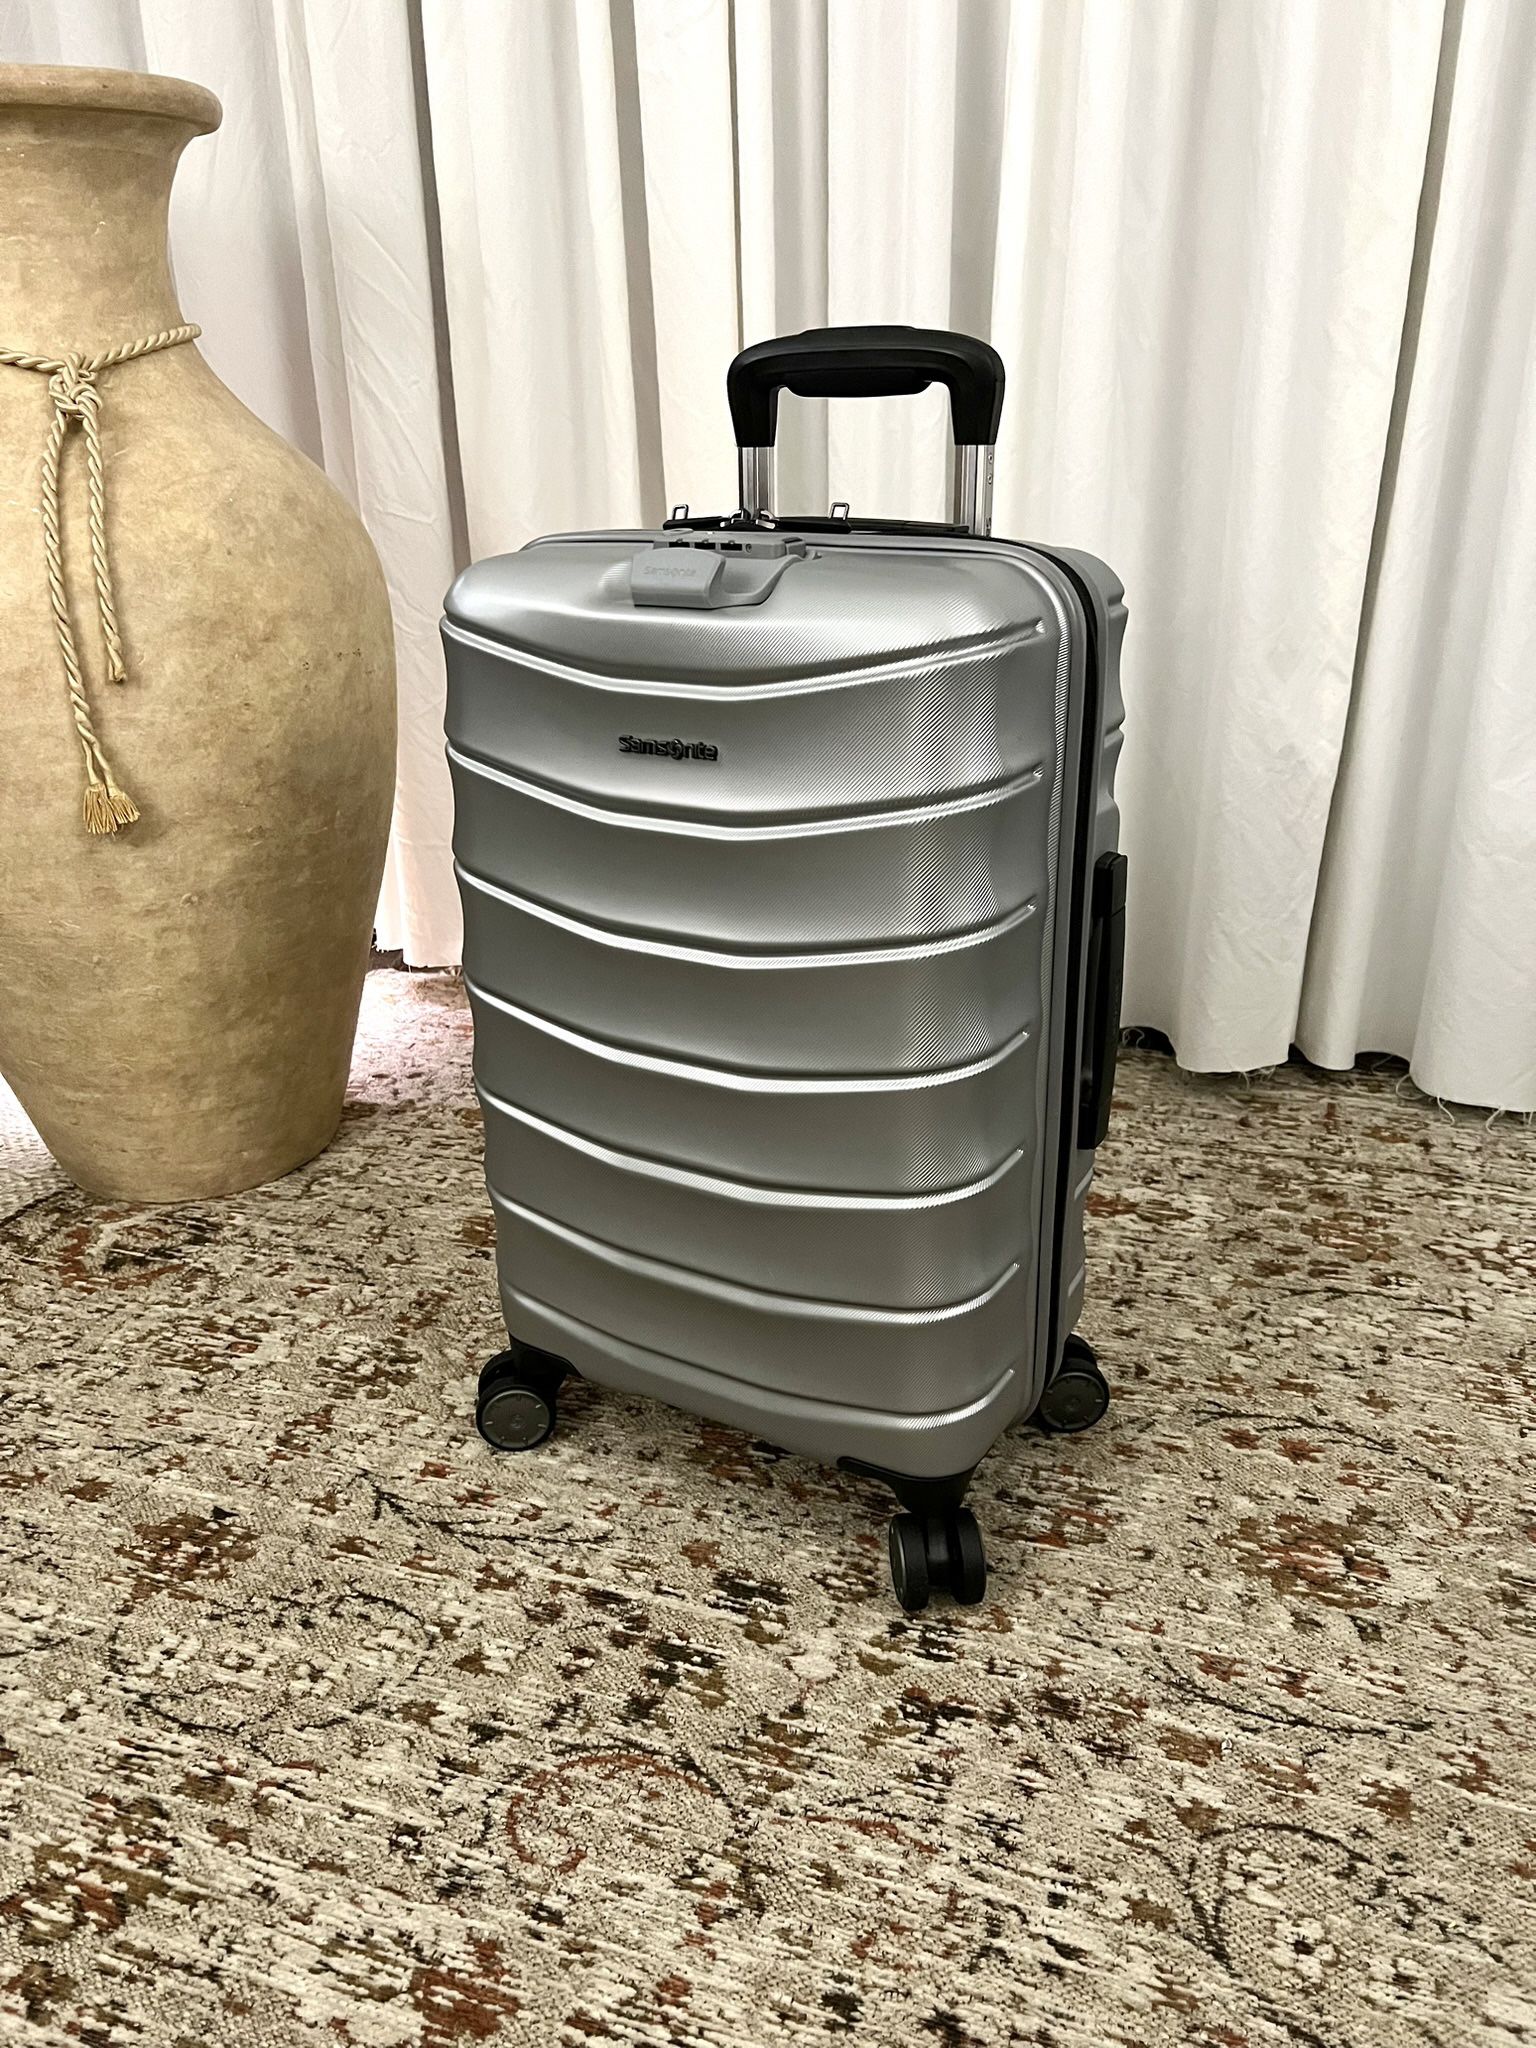 Samsonite Hardside Carry on Luggage